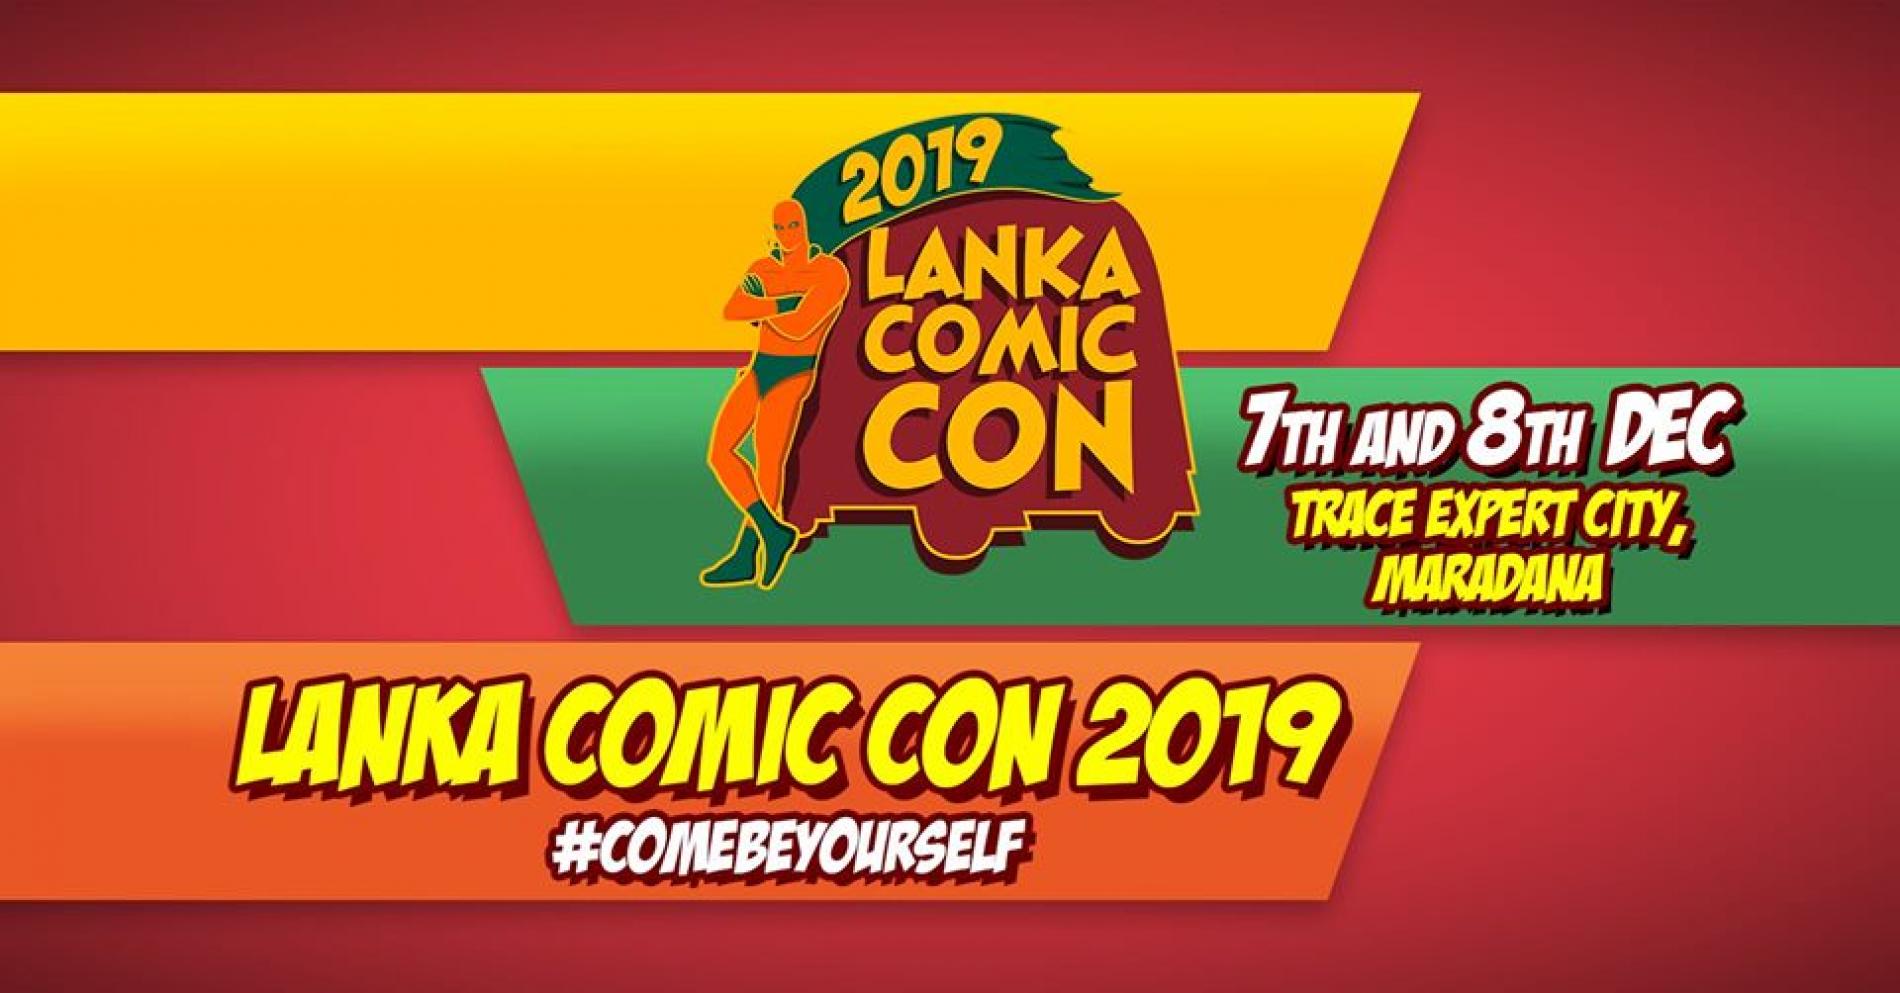 Lanka Comic Con 2019